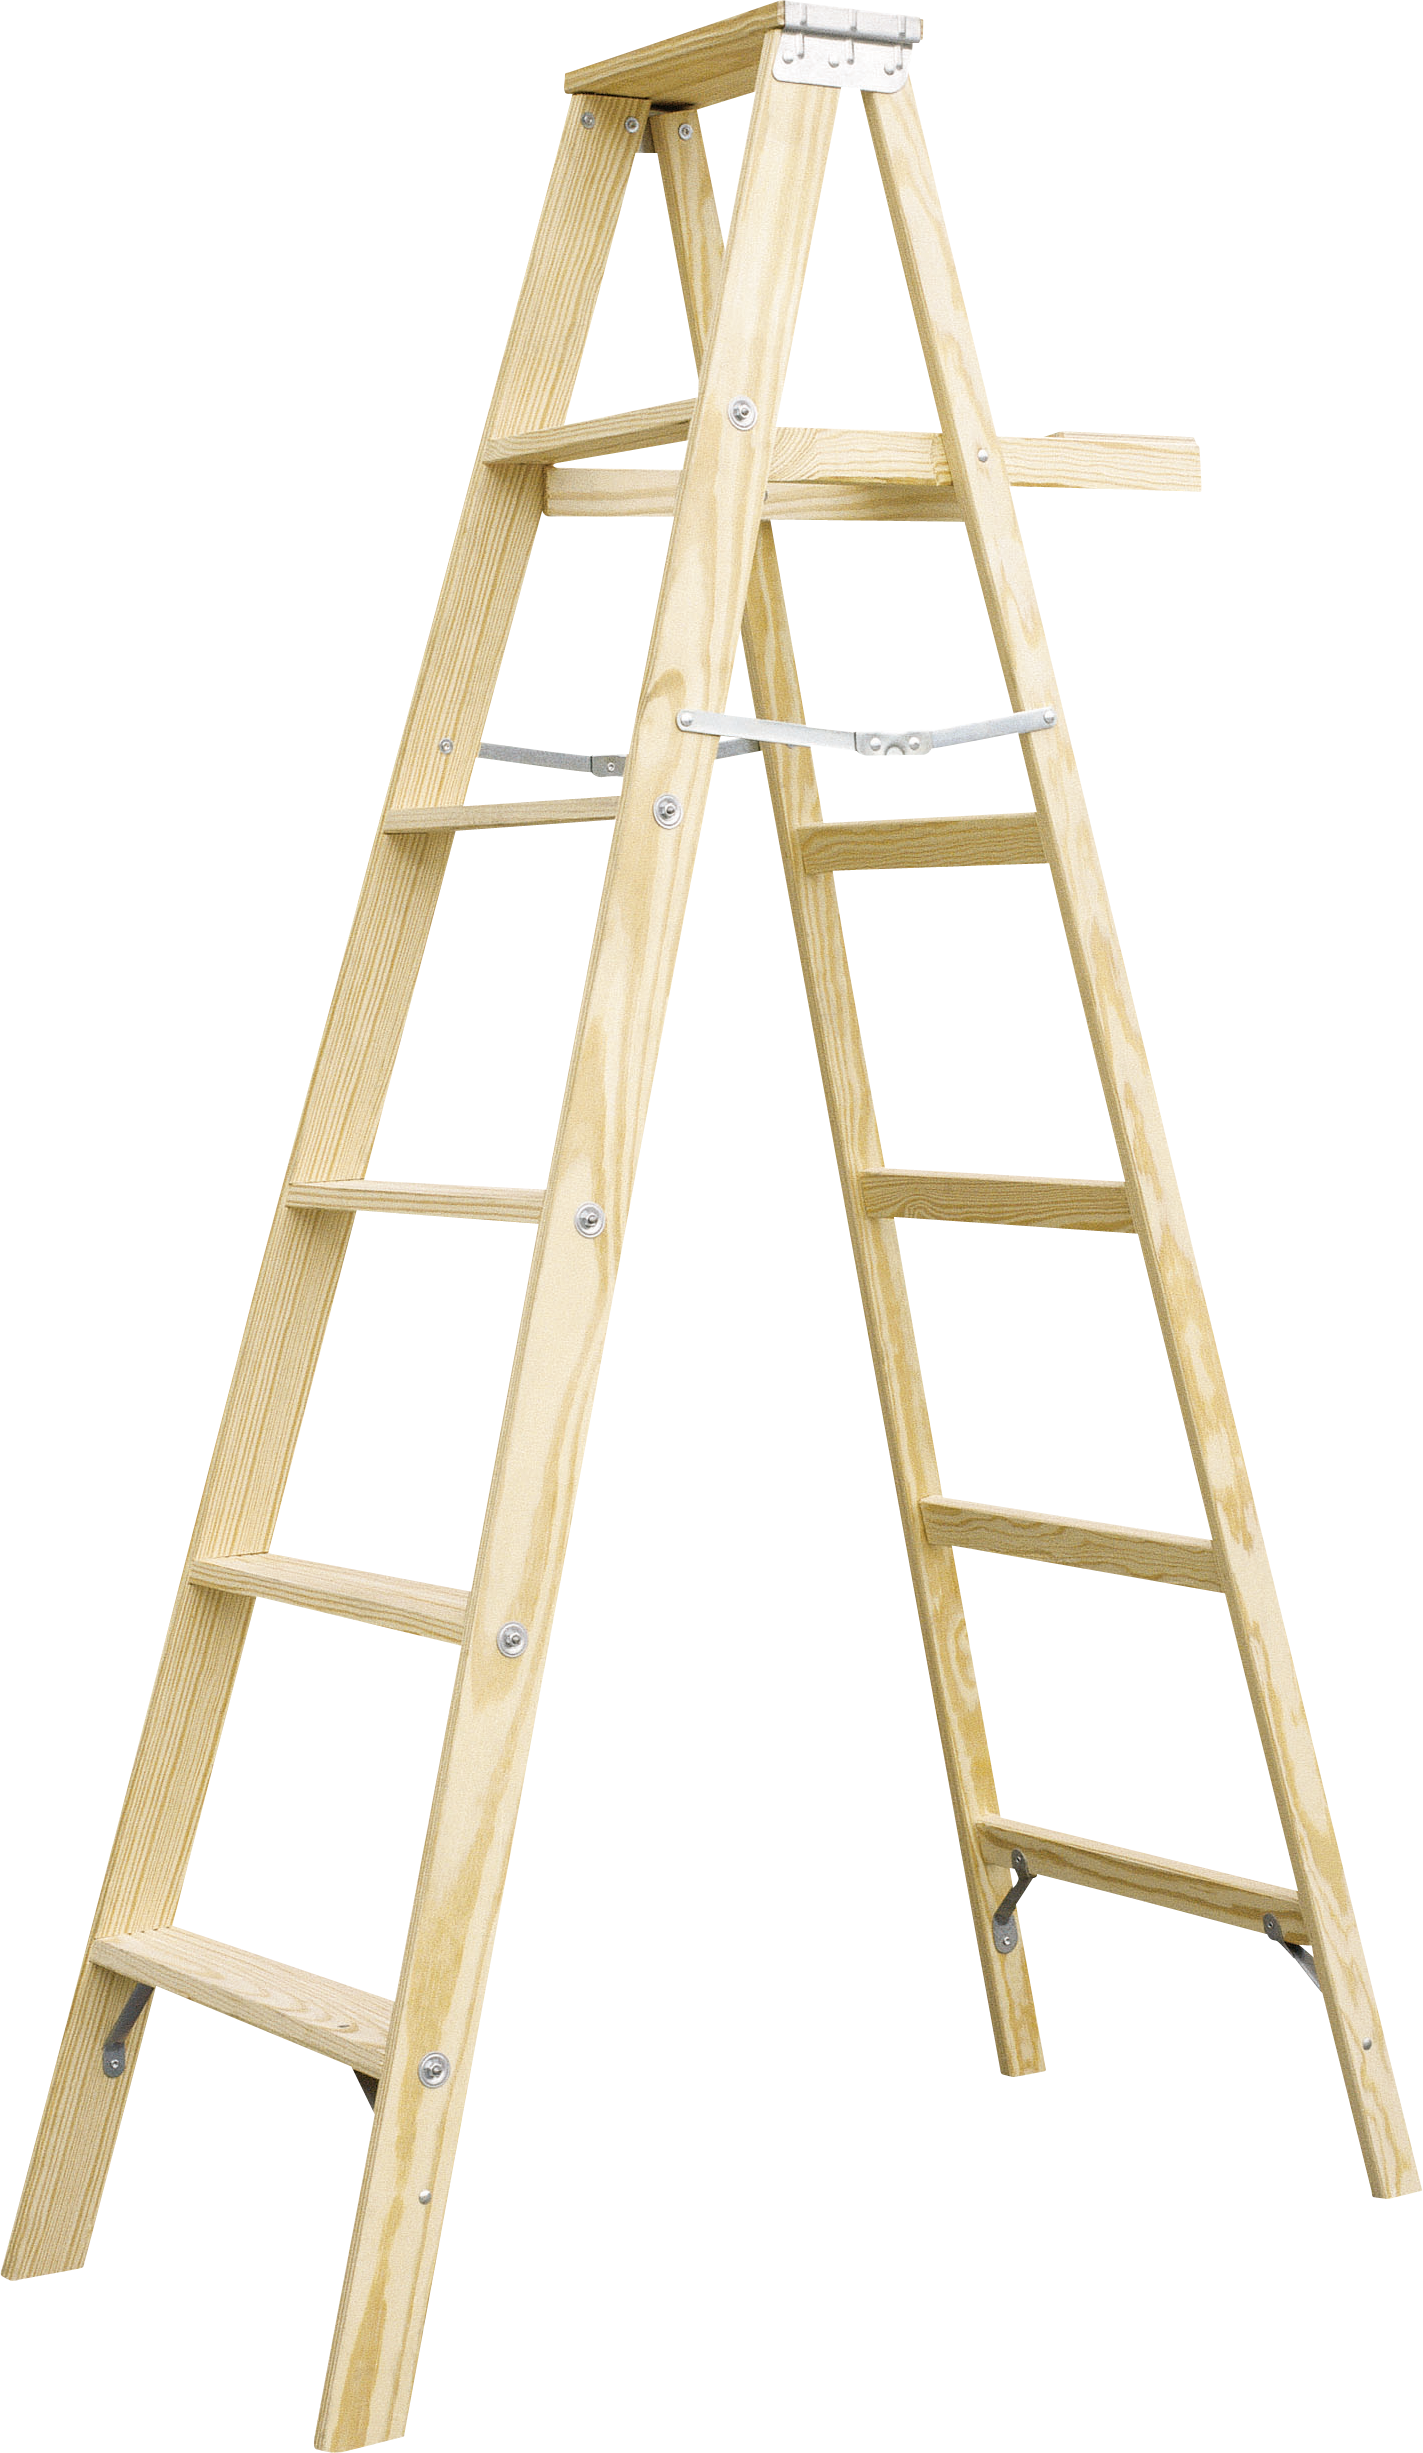 Wooden step ladder PNG Photos